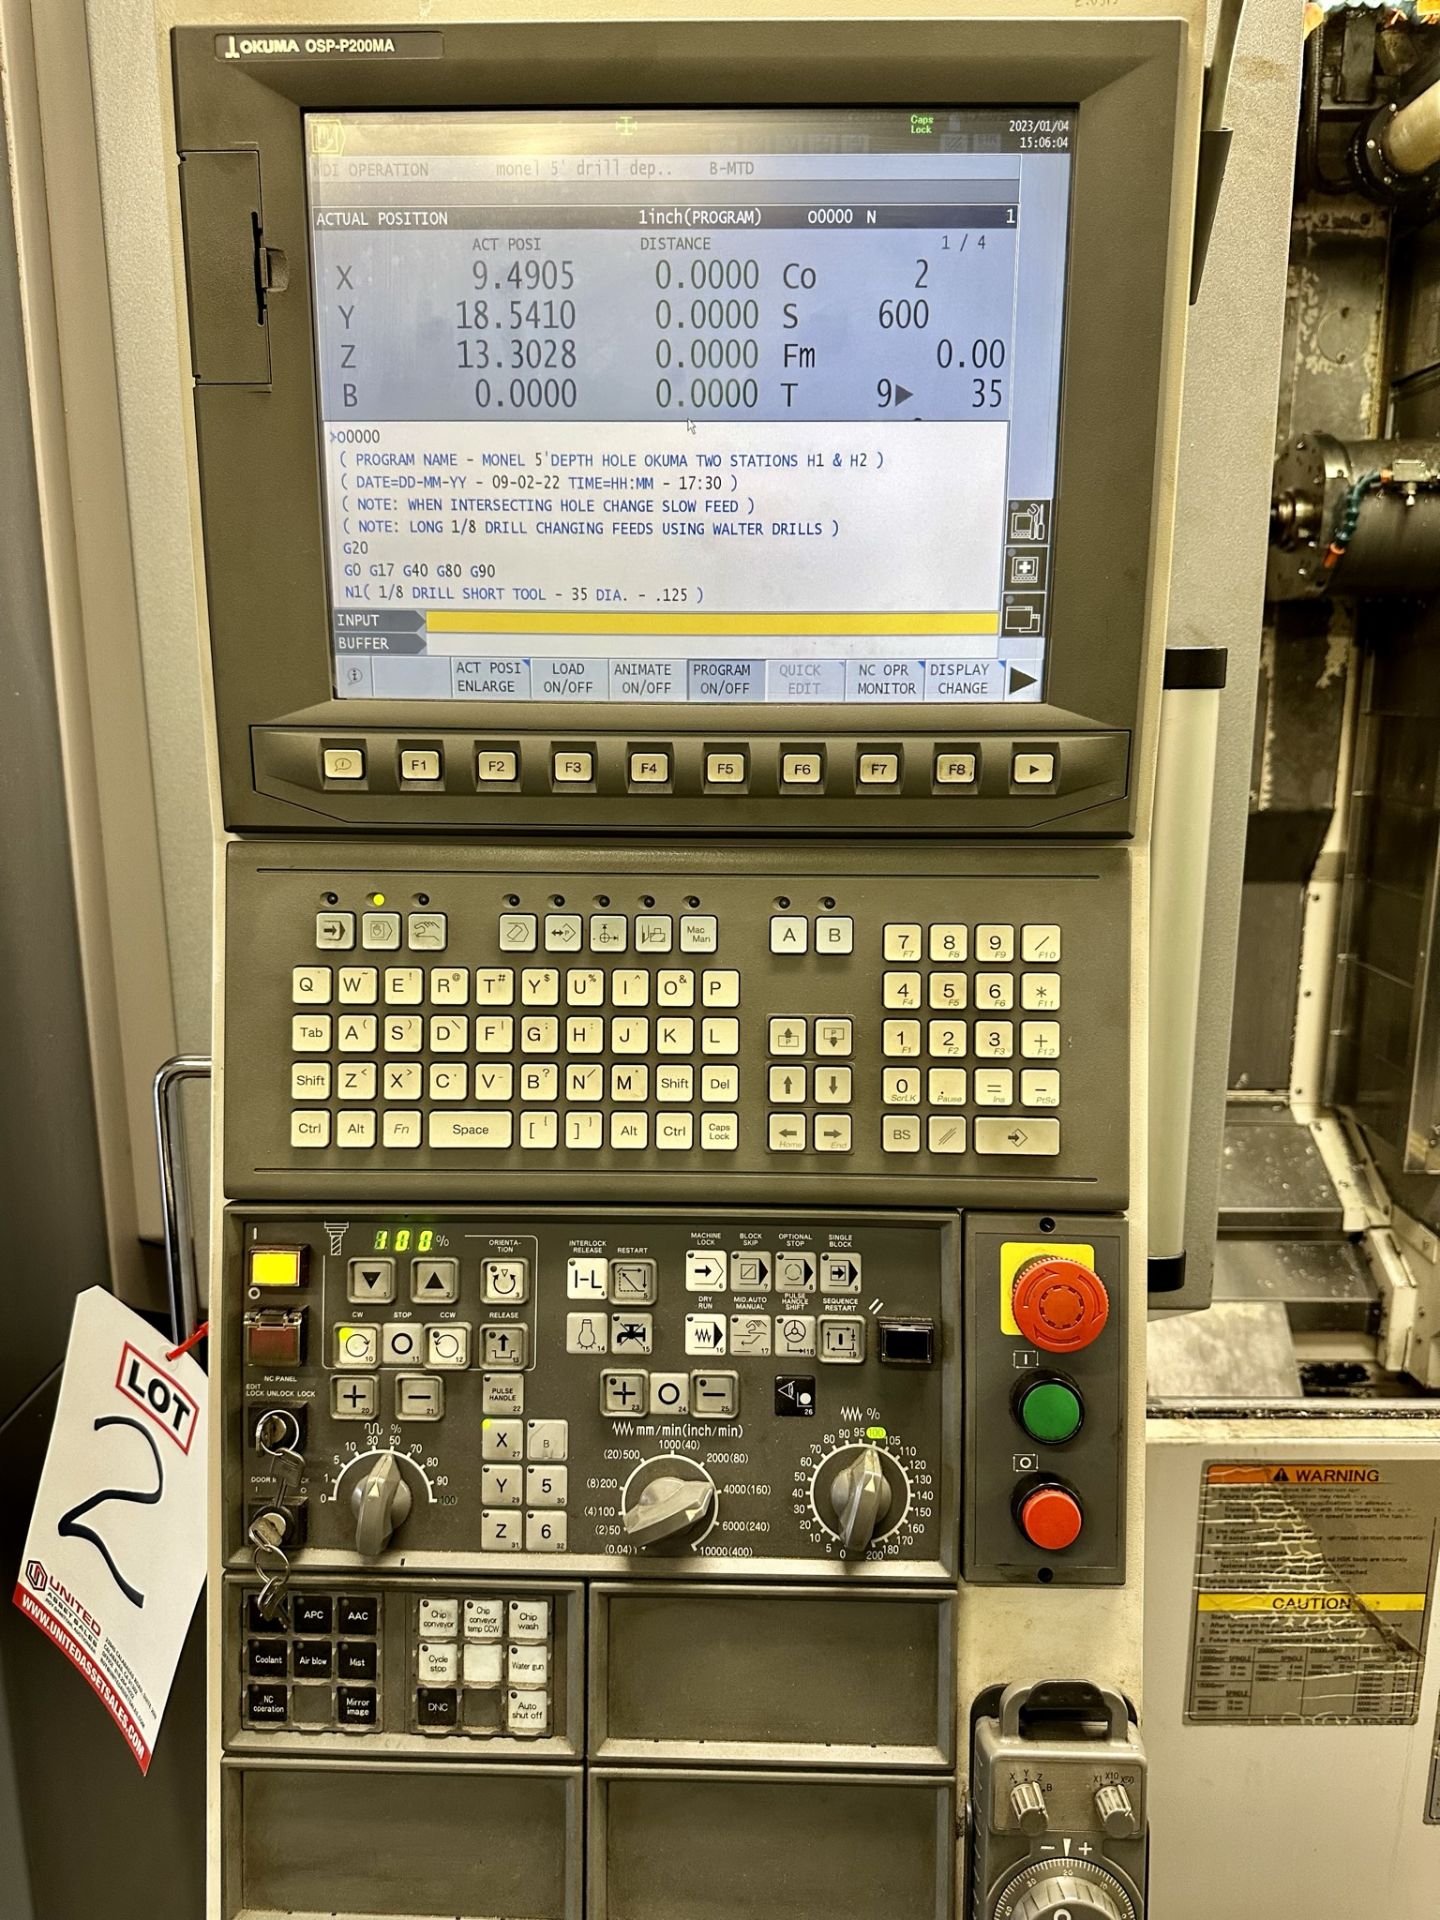 2011 OKUMA MB-4000H HORIZONTAL MACHINING CENTER, OSP-P200MA CNC CONTROL, XYZ TRAVELS: 22" X 22" X - Image 5 of 27